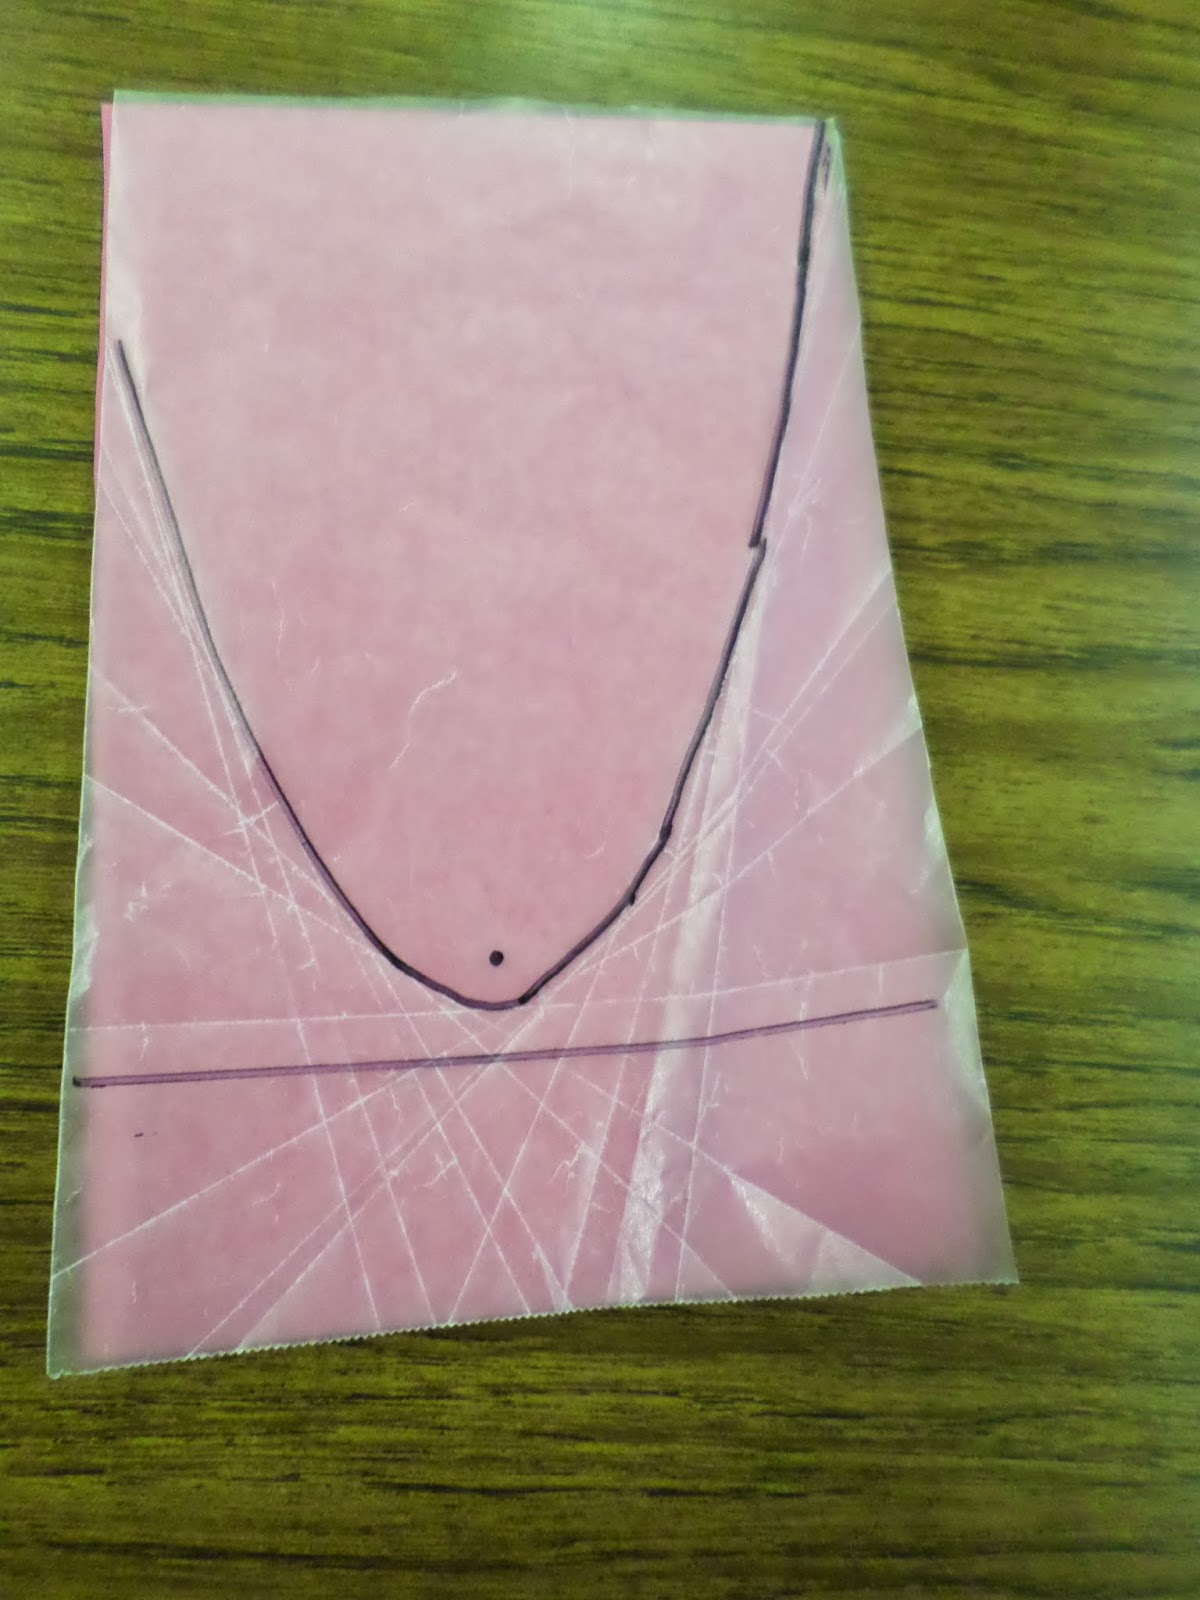 Parabola drawn in on wax paper parabola activity. 